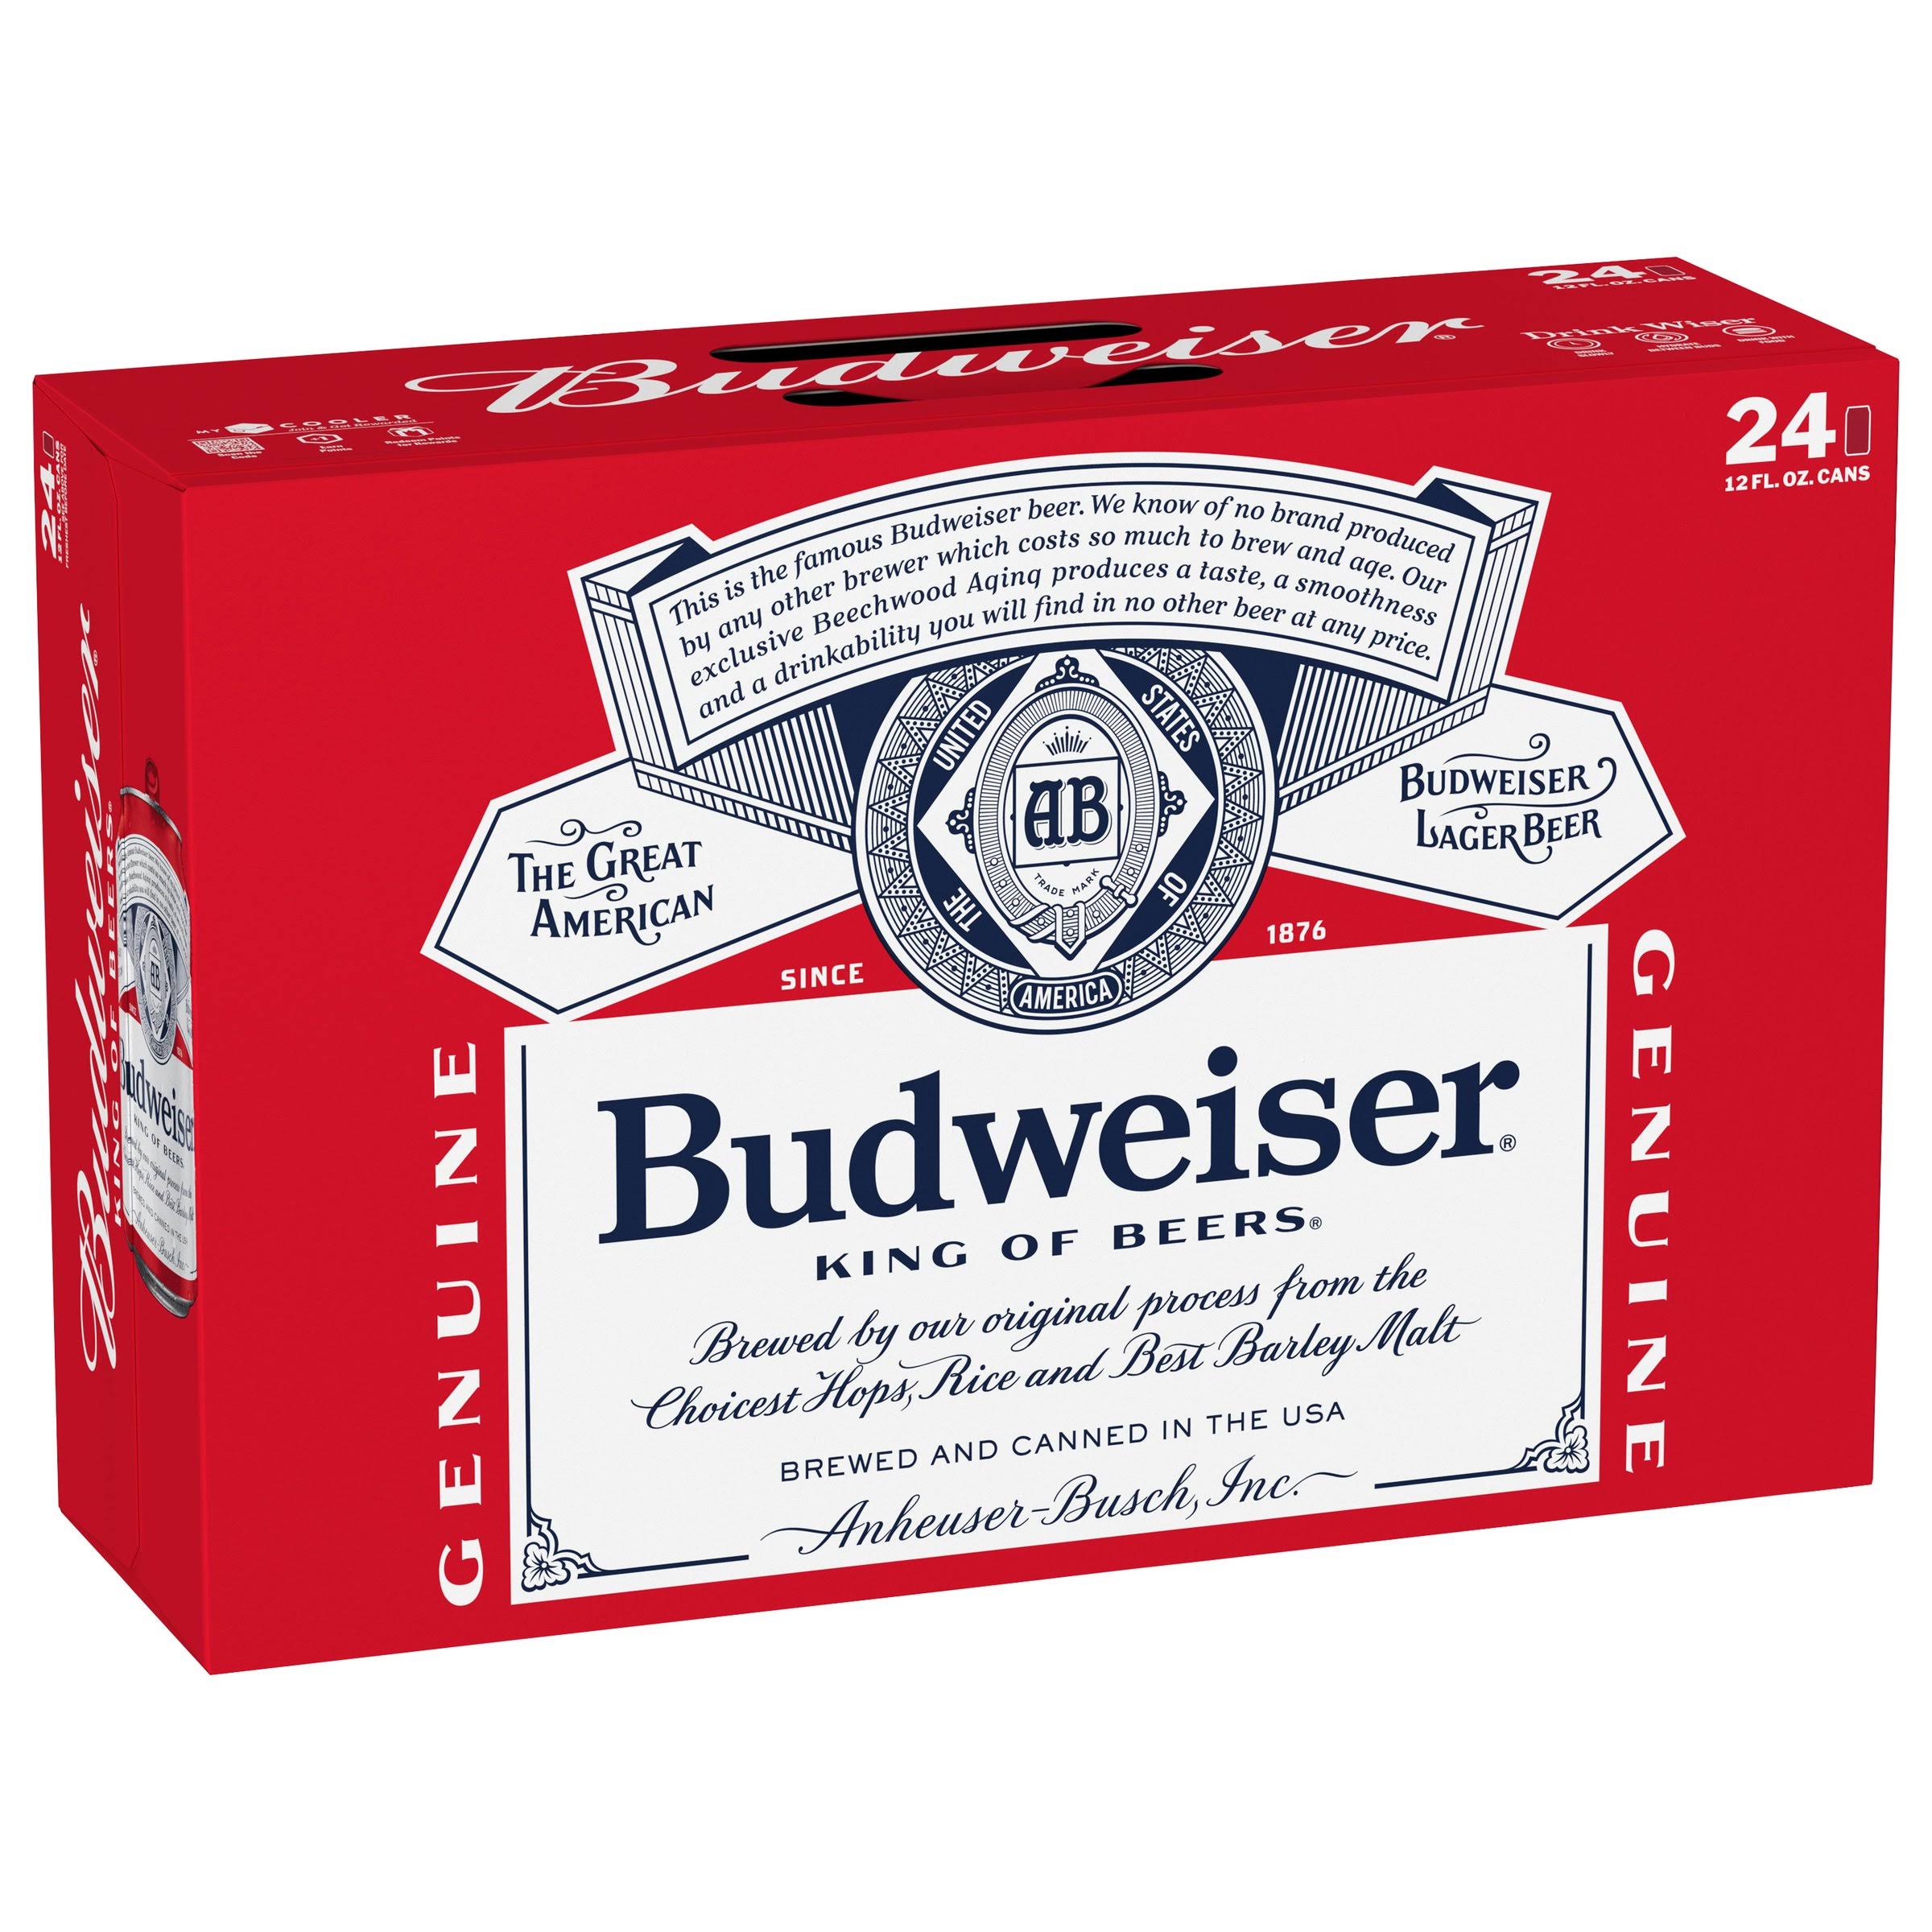 Budweiser Beer, Lager, Chicago Cubs - 24 pack, 12 fl oz cans